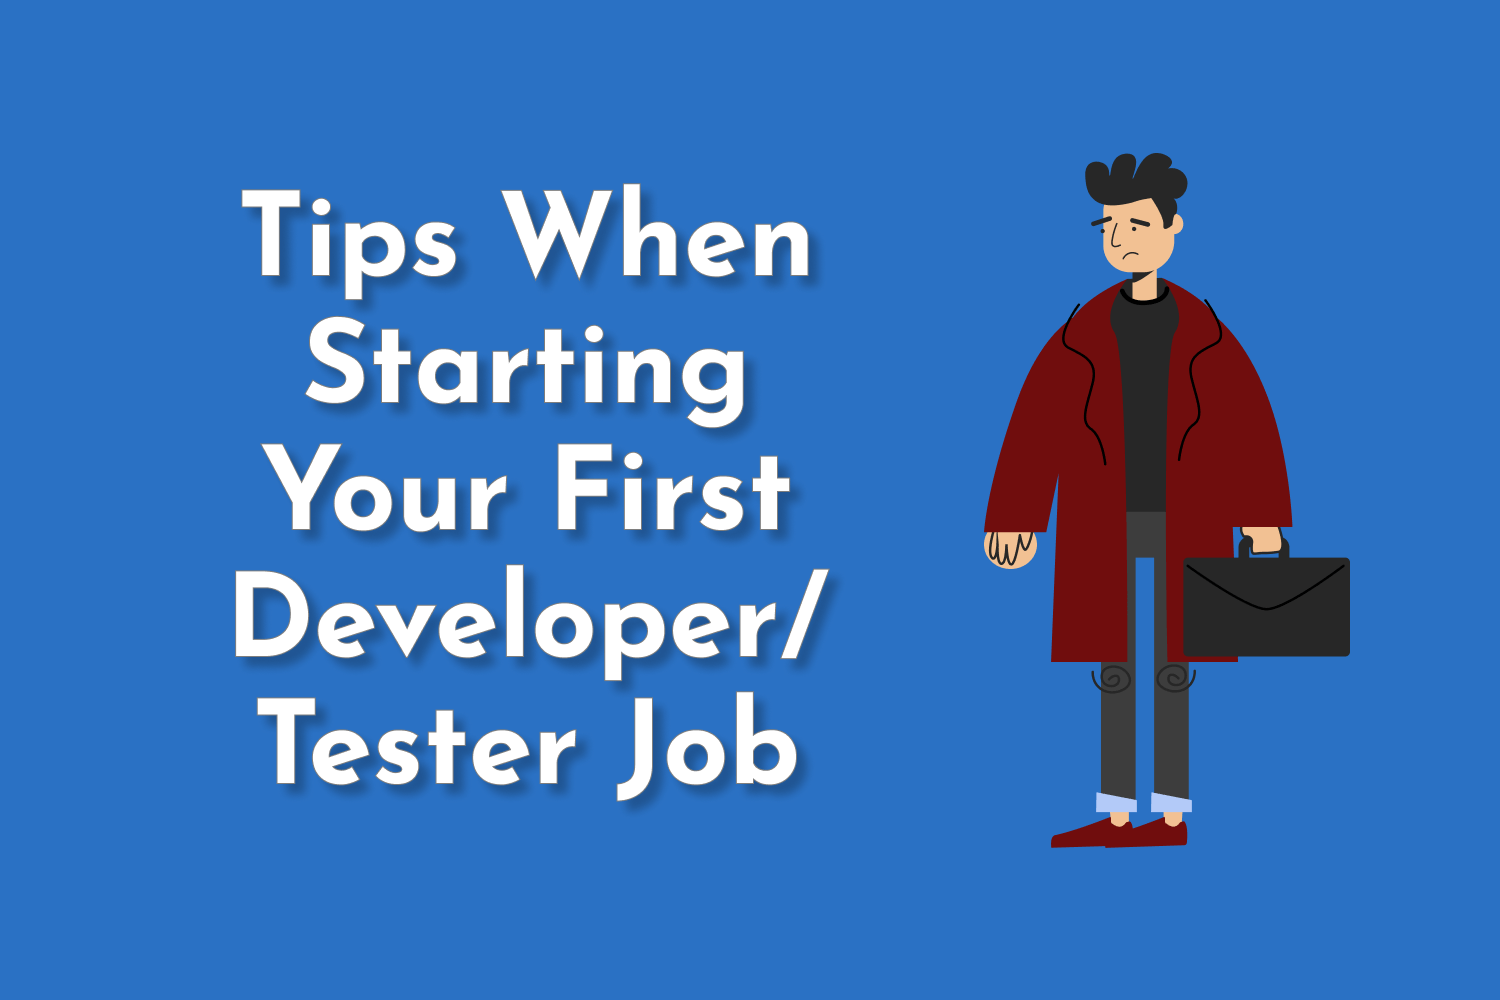 Tips When Starting Your First Developer/Tester Job